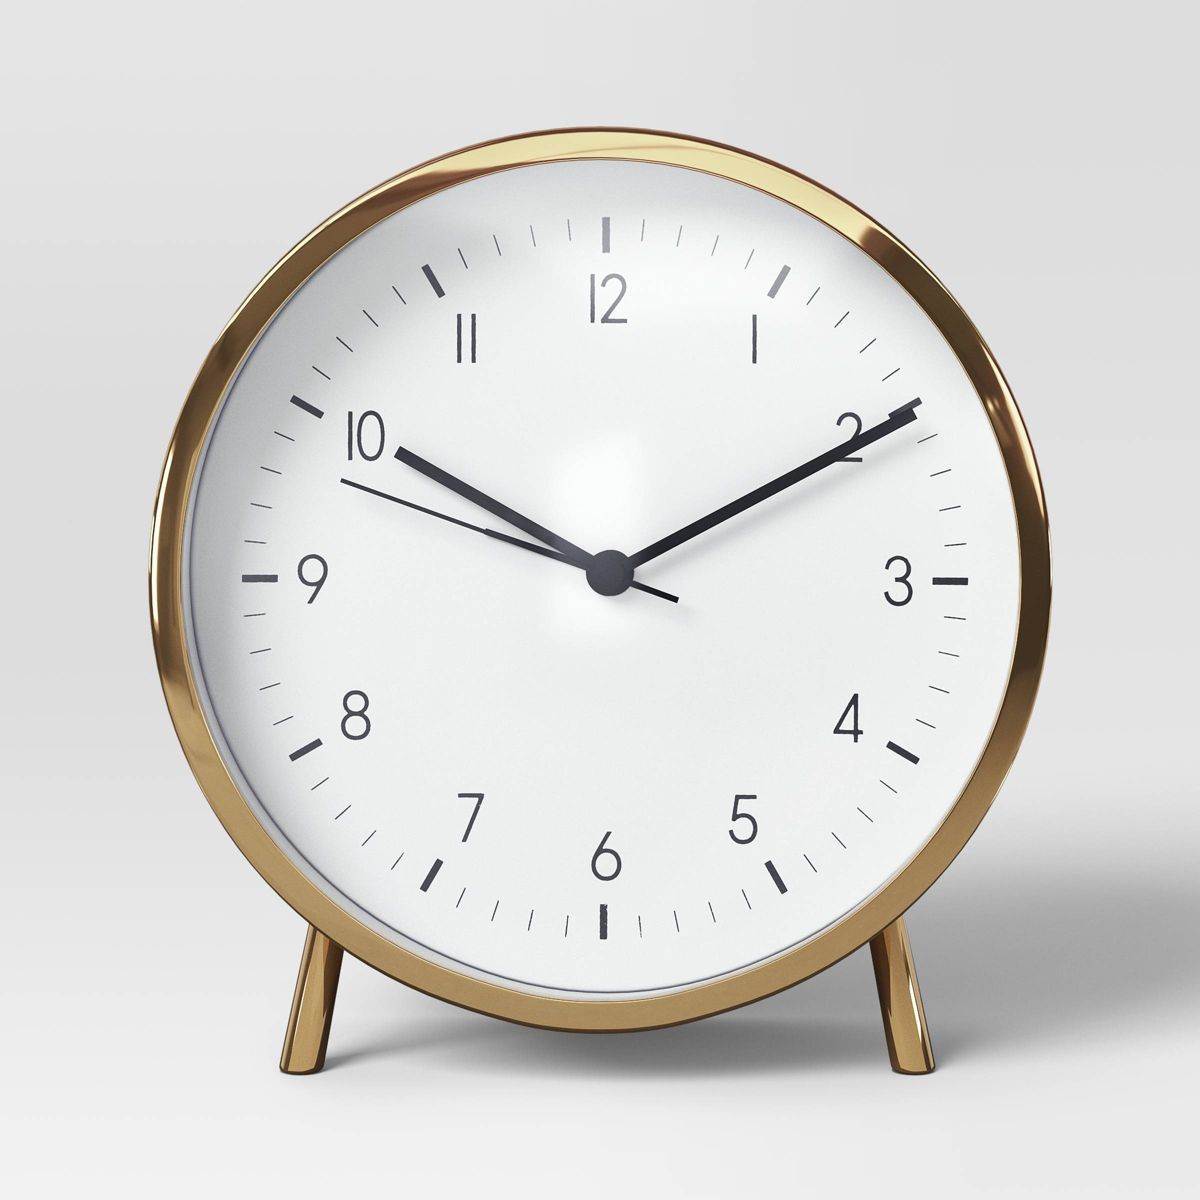 6" Mantle Clock with Alarm Brass - Threshold™ | Target